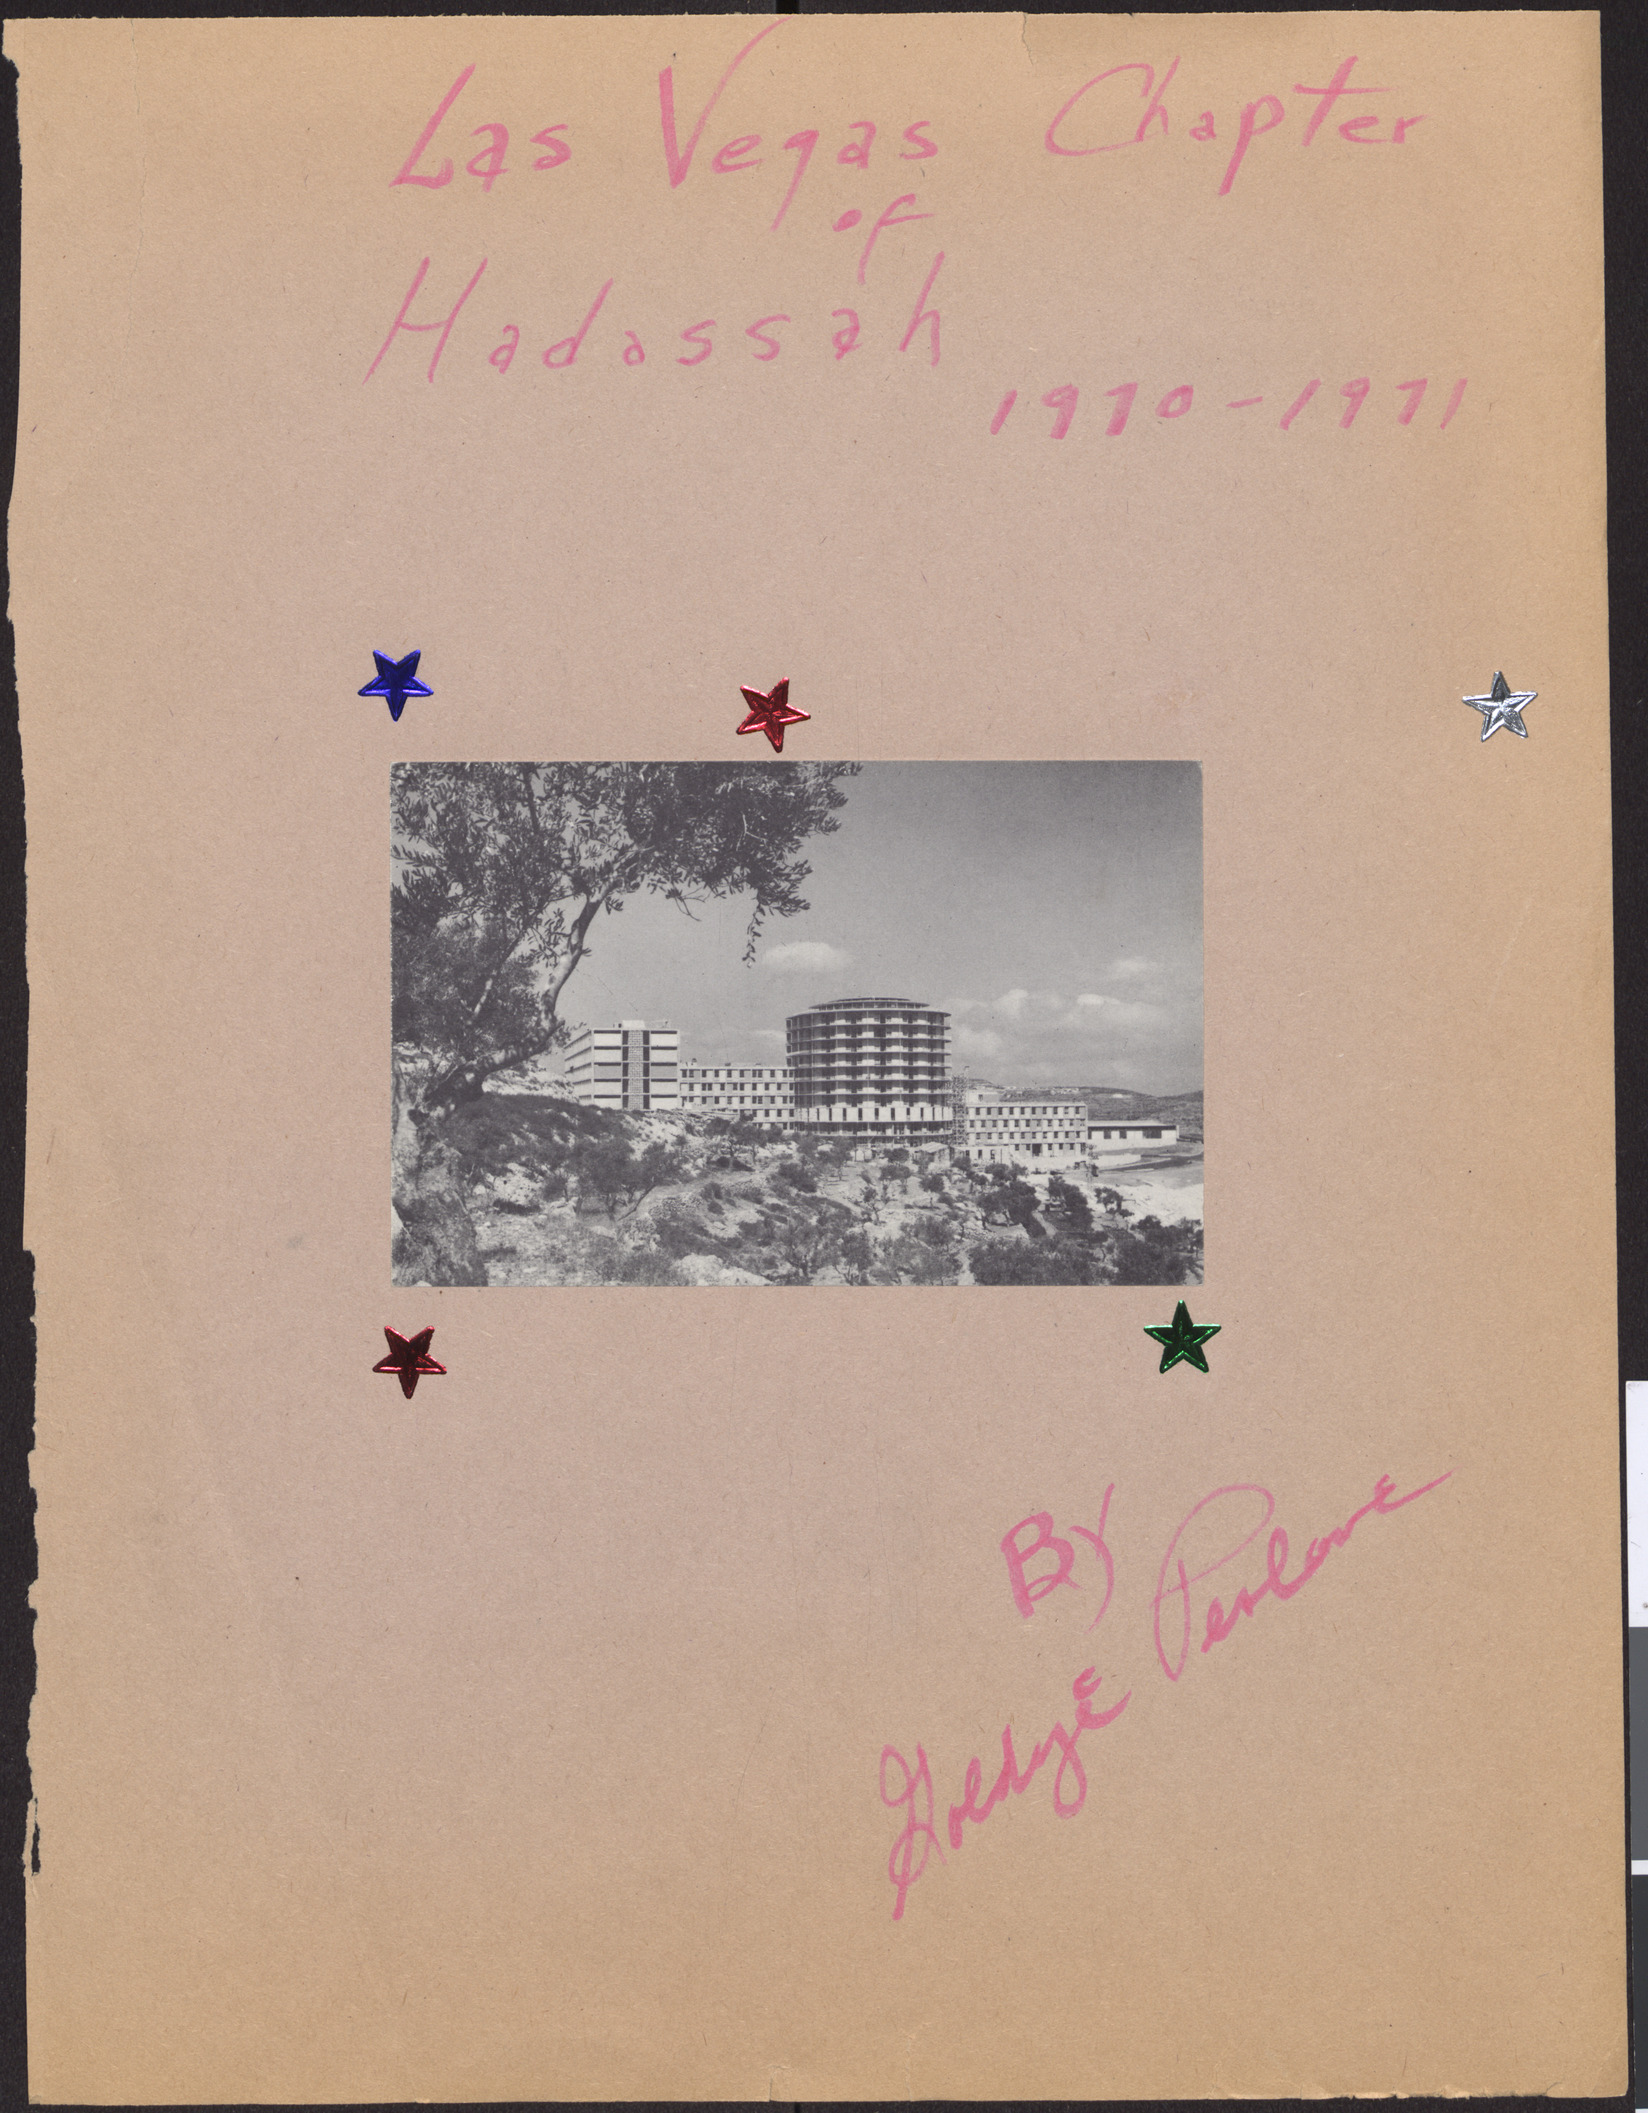 Inscription, Las Vegas Chapter of Hadassah 1970-1971 by Goldye Perlove, and photograph of the Hadassah Medical Organization hospital in Israel